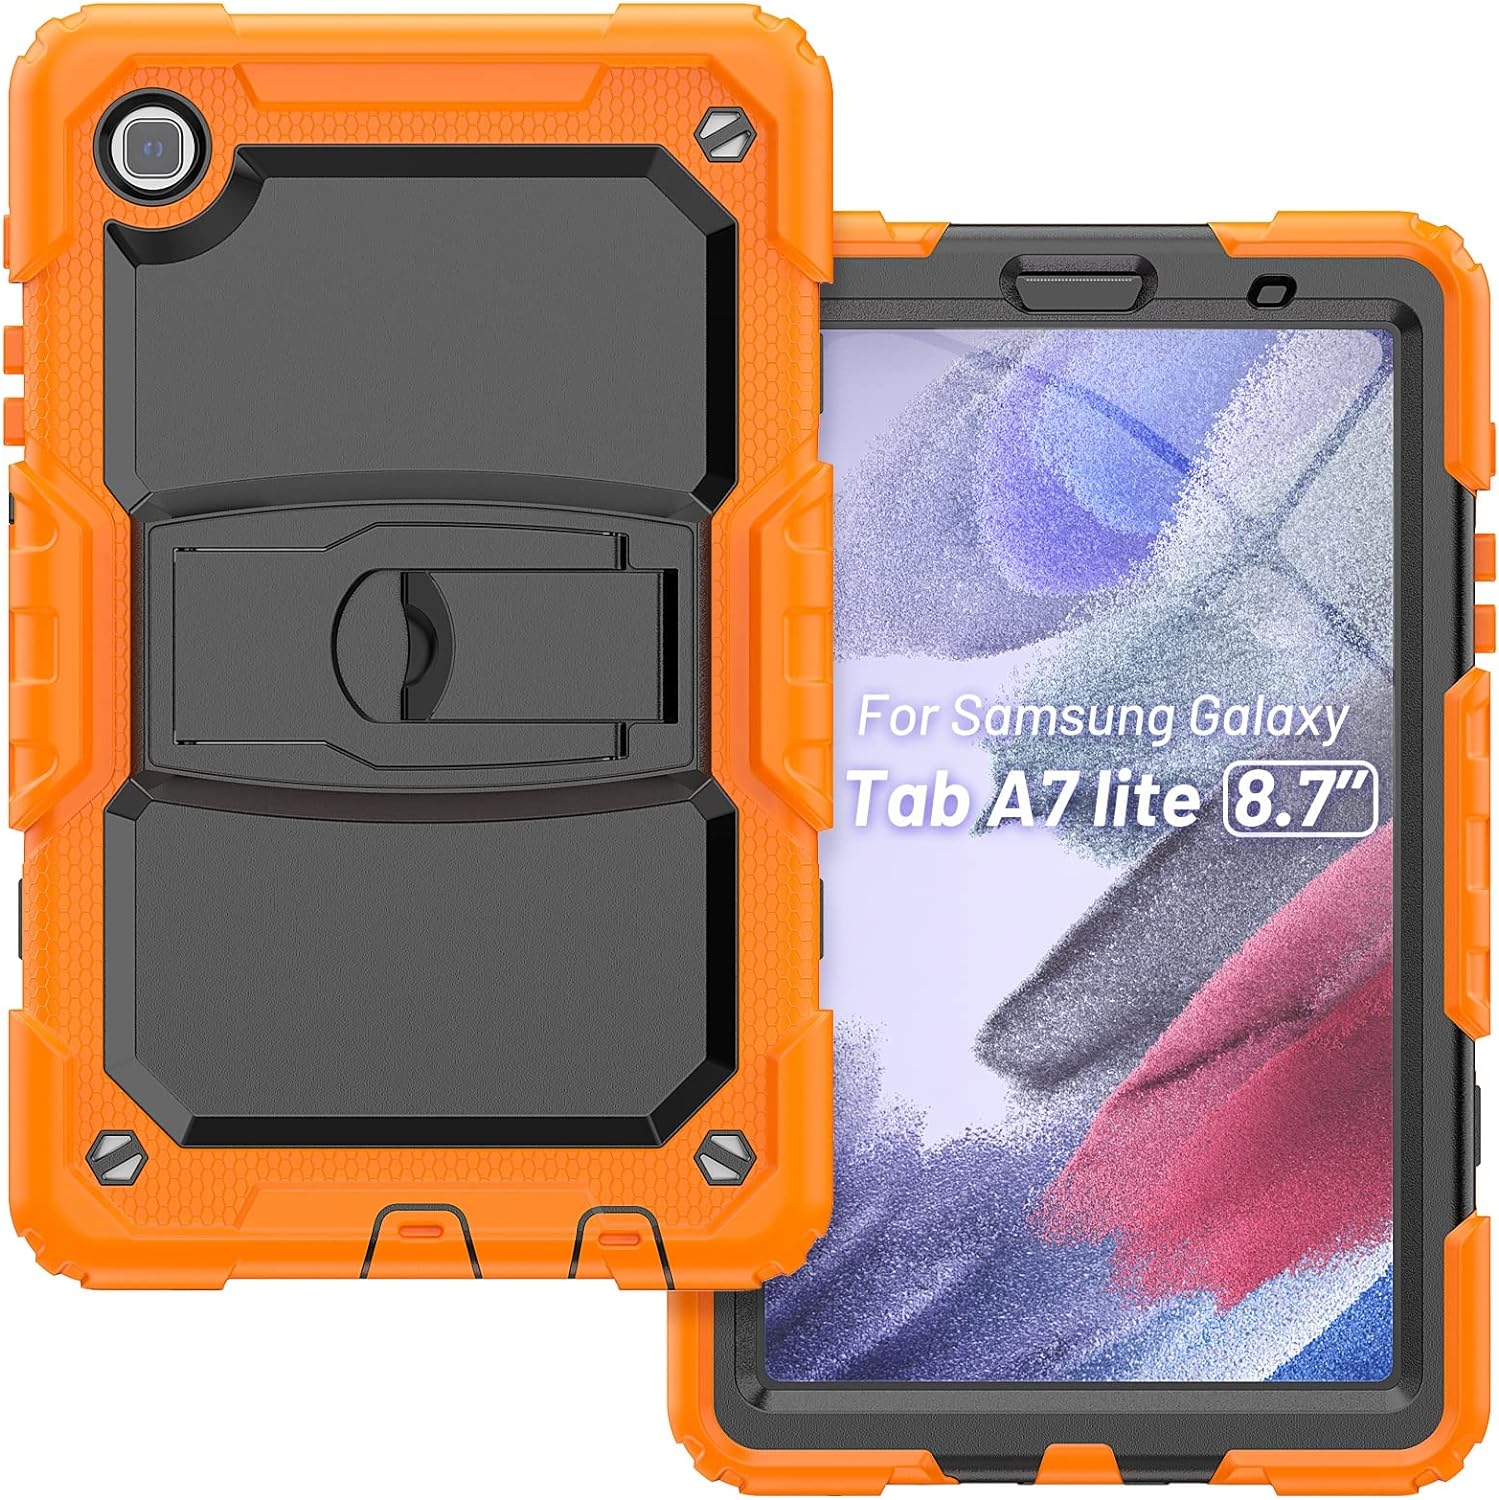 Samsung Galaxy Tab A7 Lite T220 Black & Orange Case RRP 19.99 CLEARANCE XL 15.99